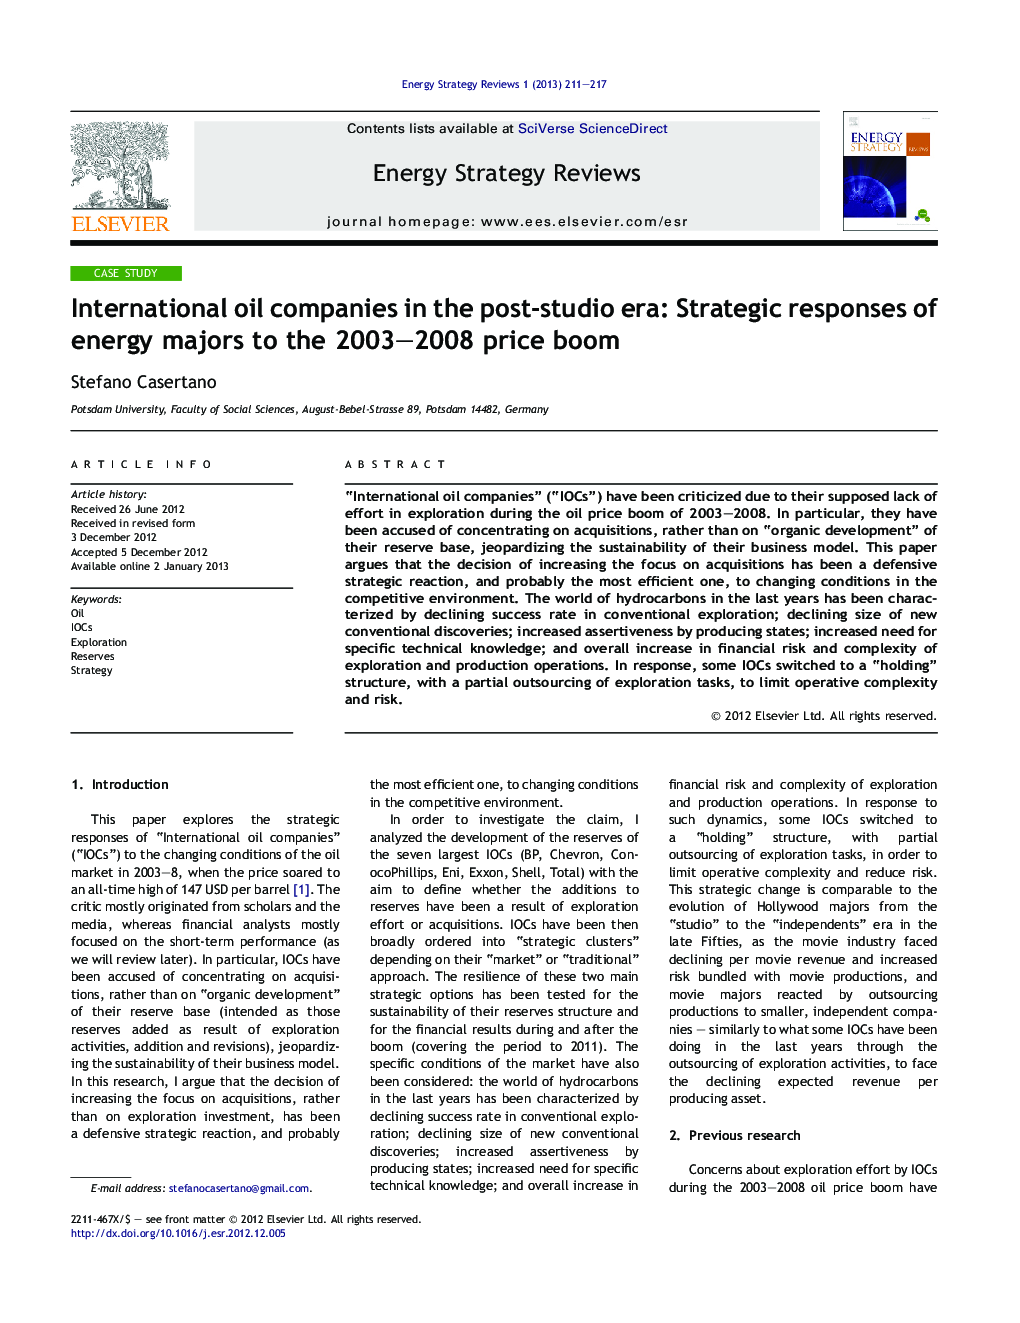 International oil companies in the post-studio era: Strategic responses of energy majors to the 2003–2008 price boom